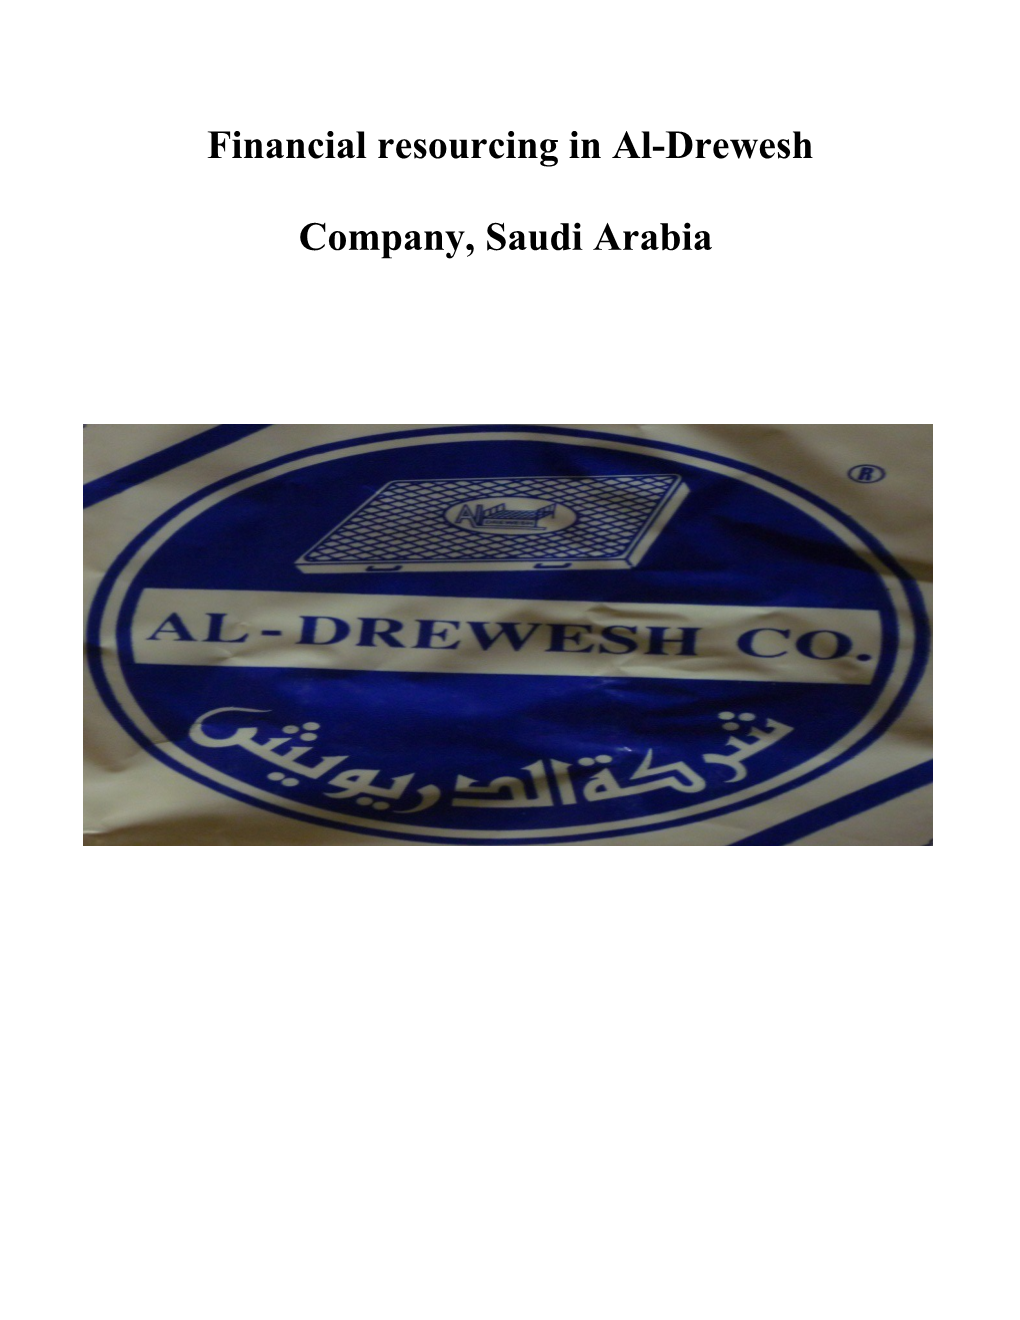 Financial Resourcing in Al-Drewesh Company, Saudi Arabia